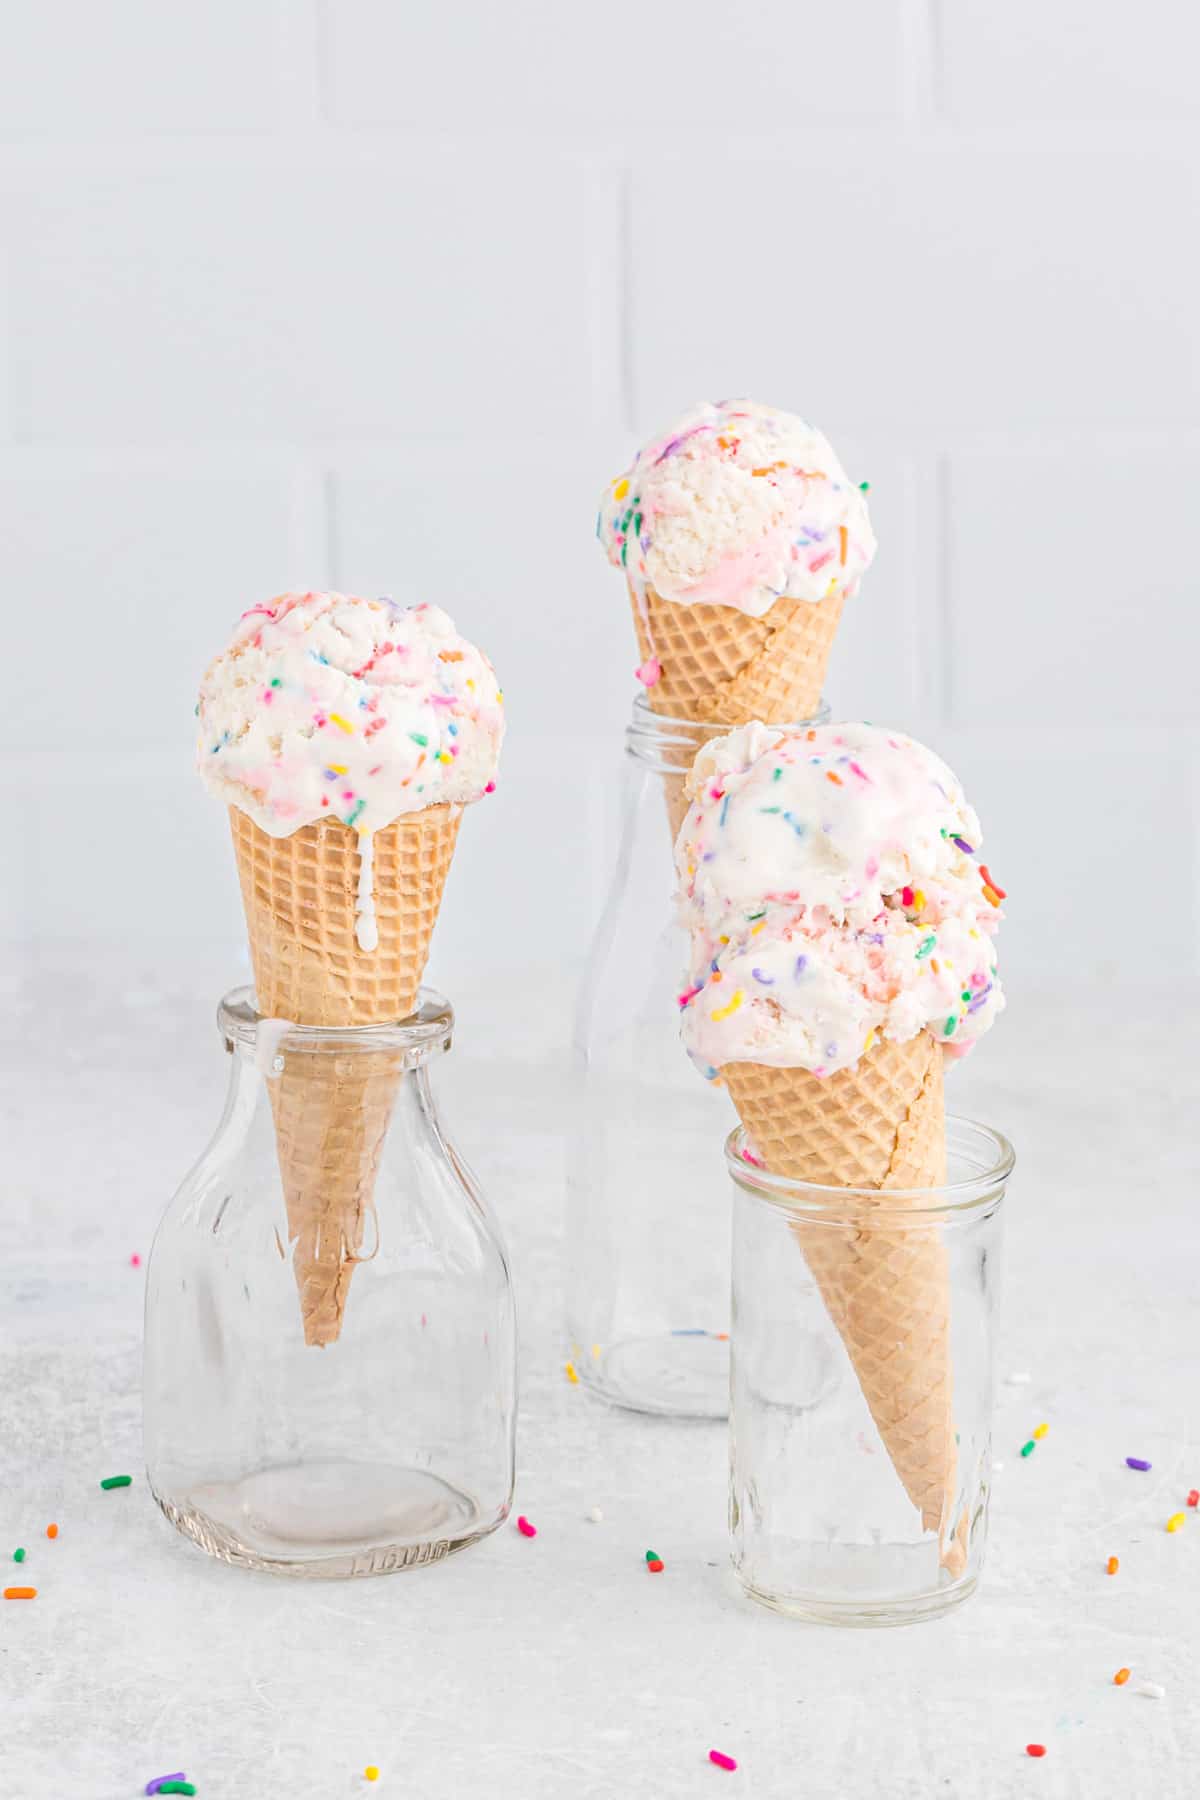 Three ice cream cones with birthday cake ice cream, set in glass jars to hold them upright